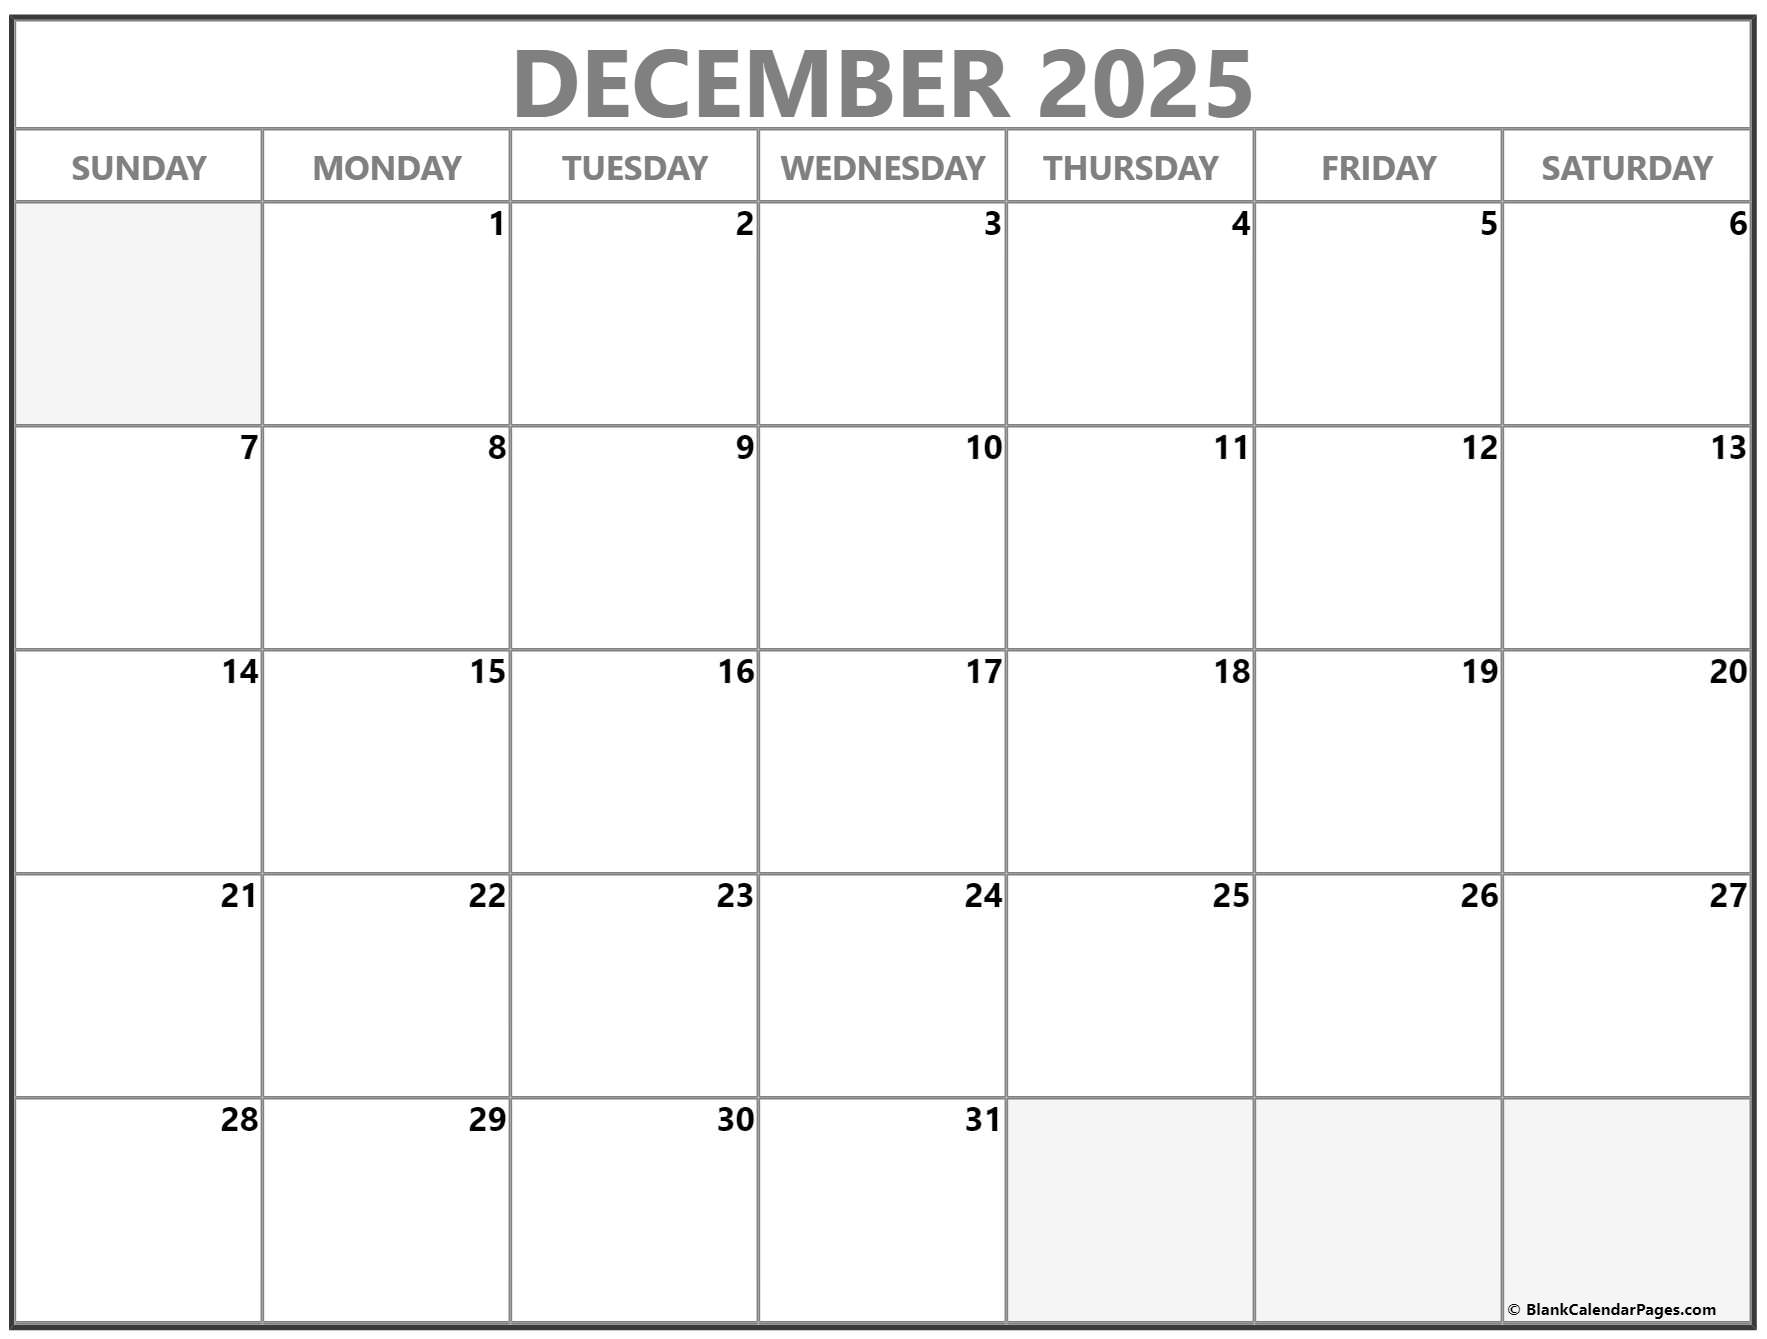 December 2025 calendar free printable calendar